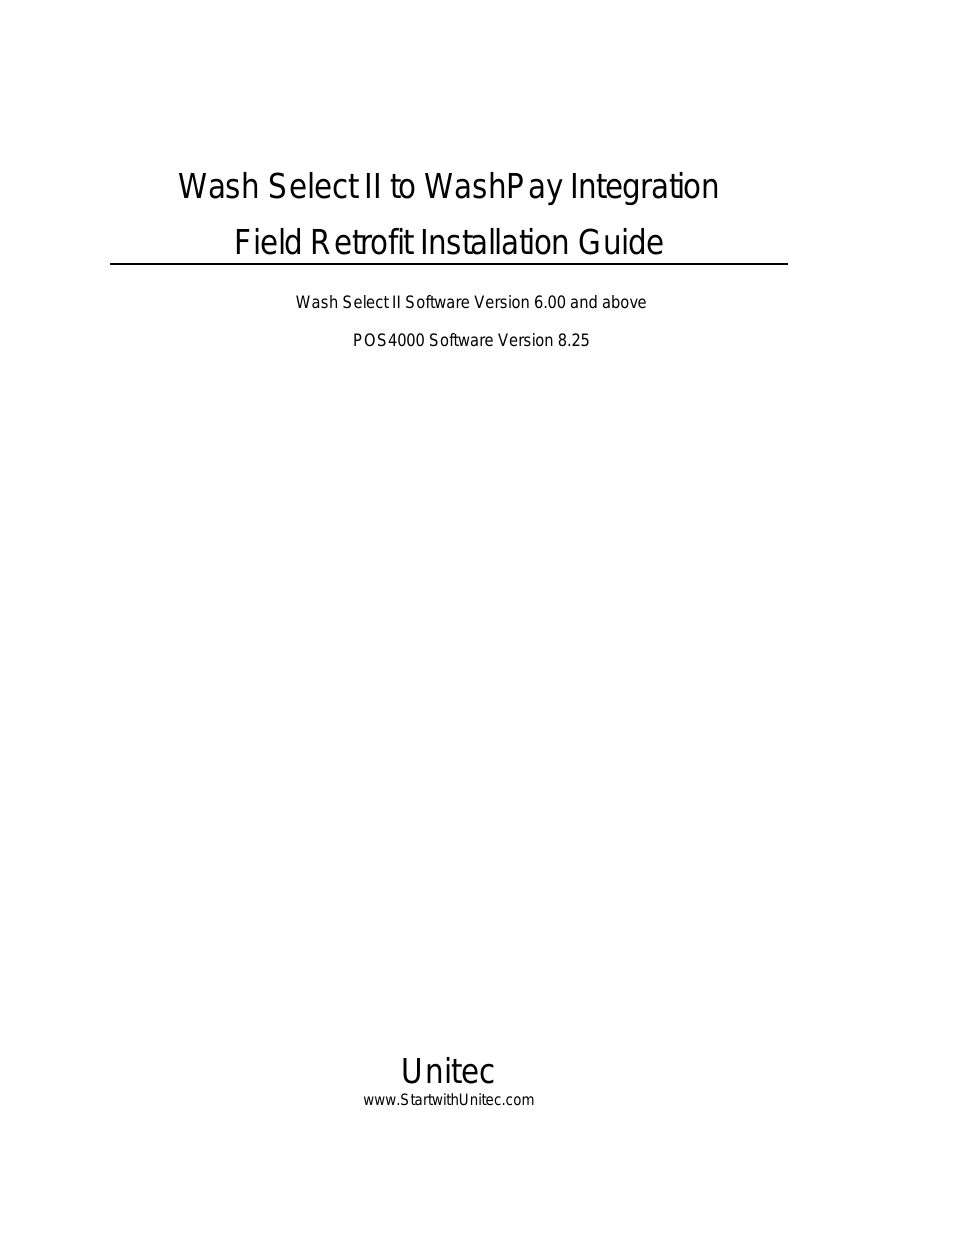 Wash Select II to WashPay Integration Installation Manual